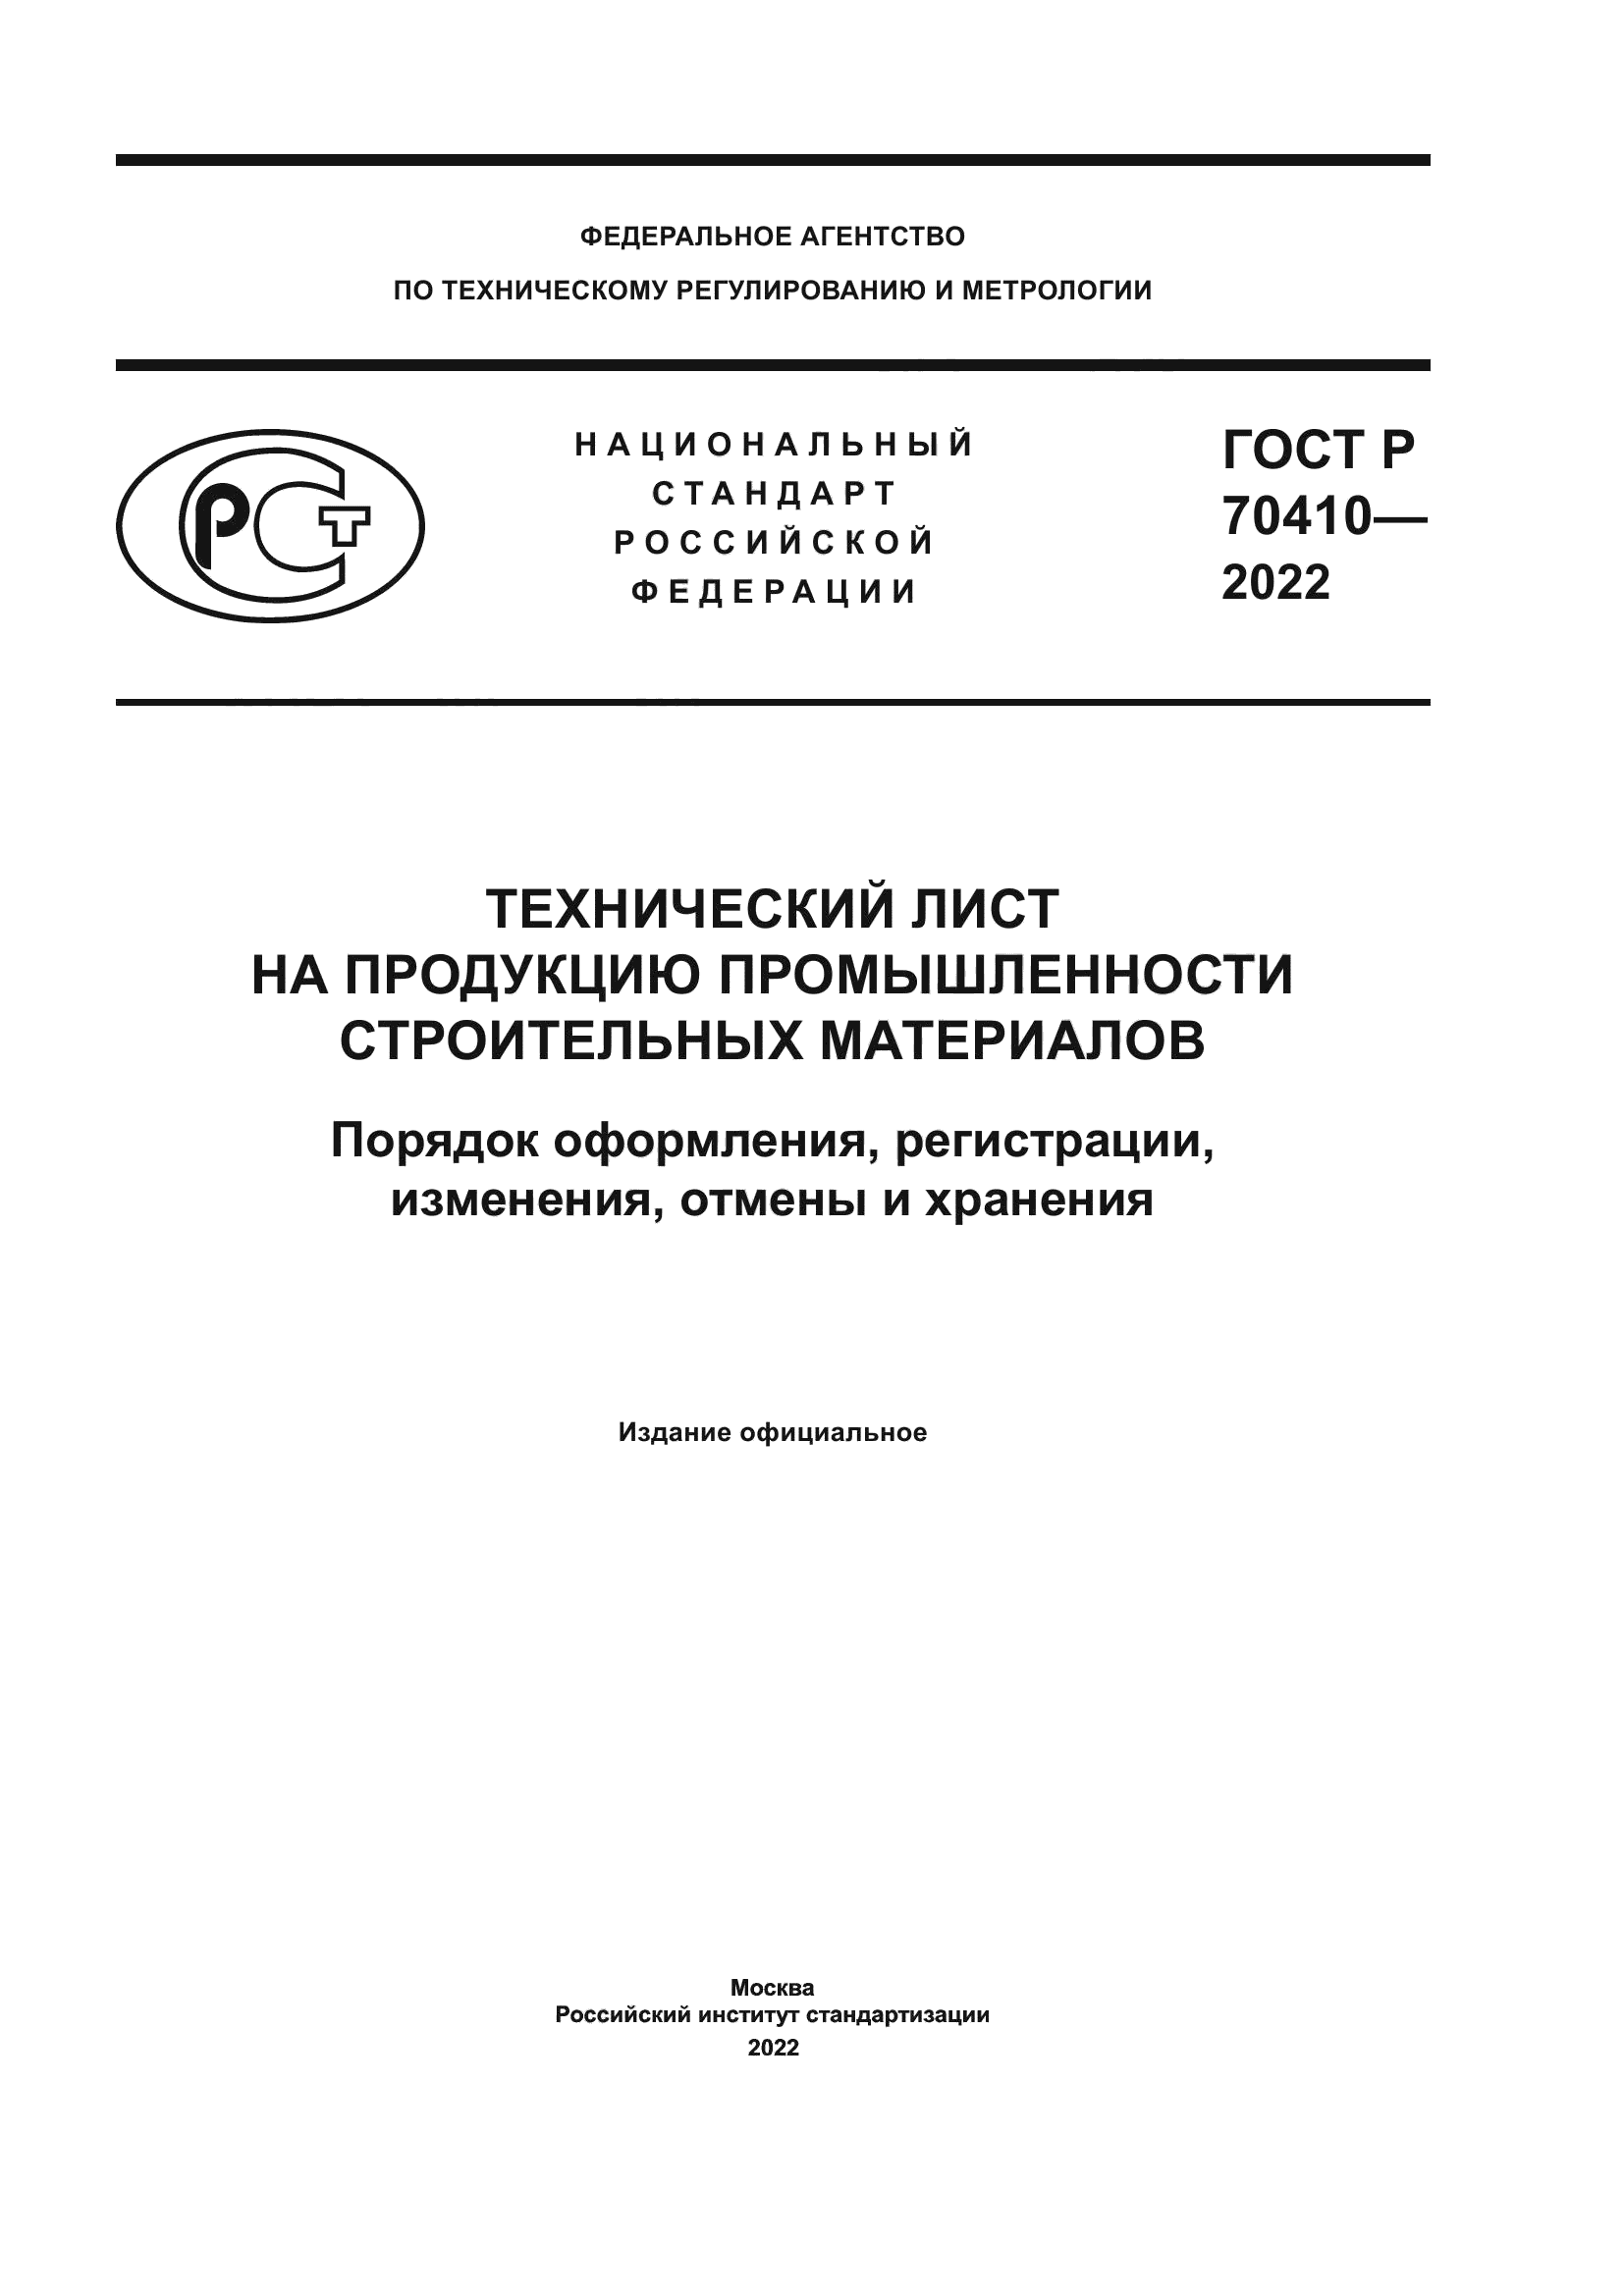 ГОСТ Р 70410-2022